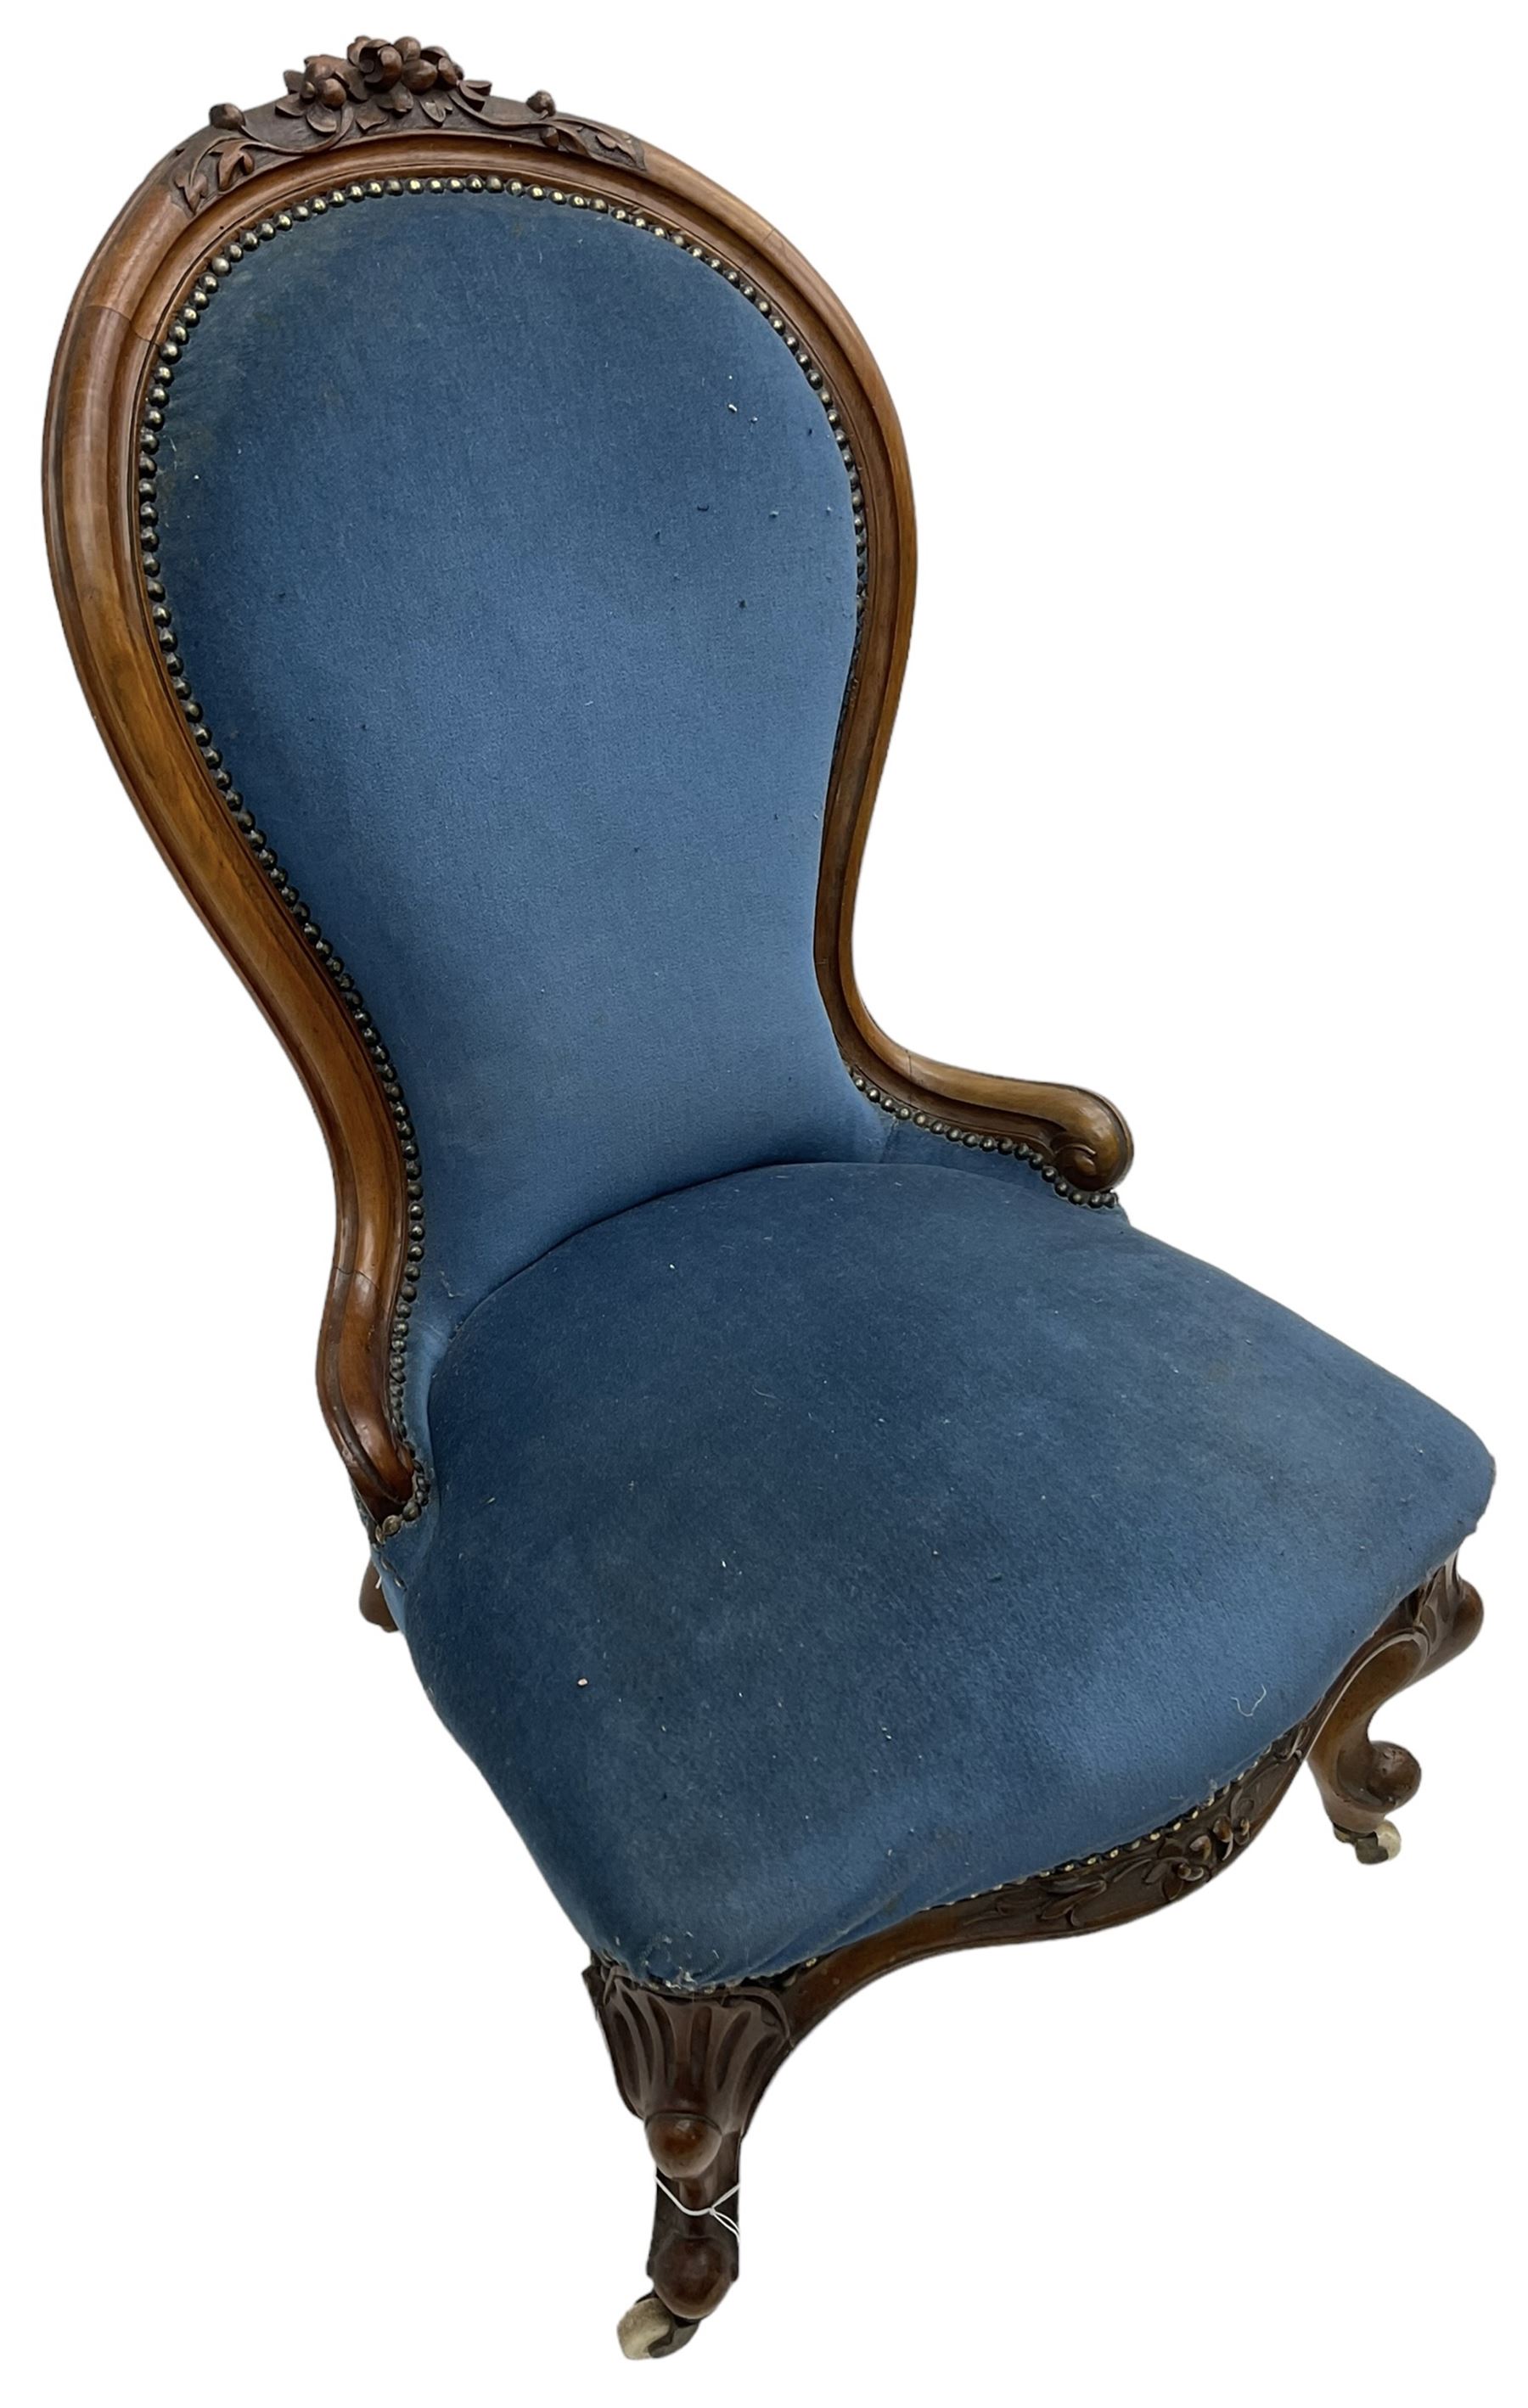 Victorian walnut spoon back nursing chair - Image 5 of 5